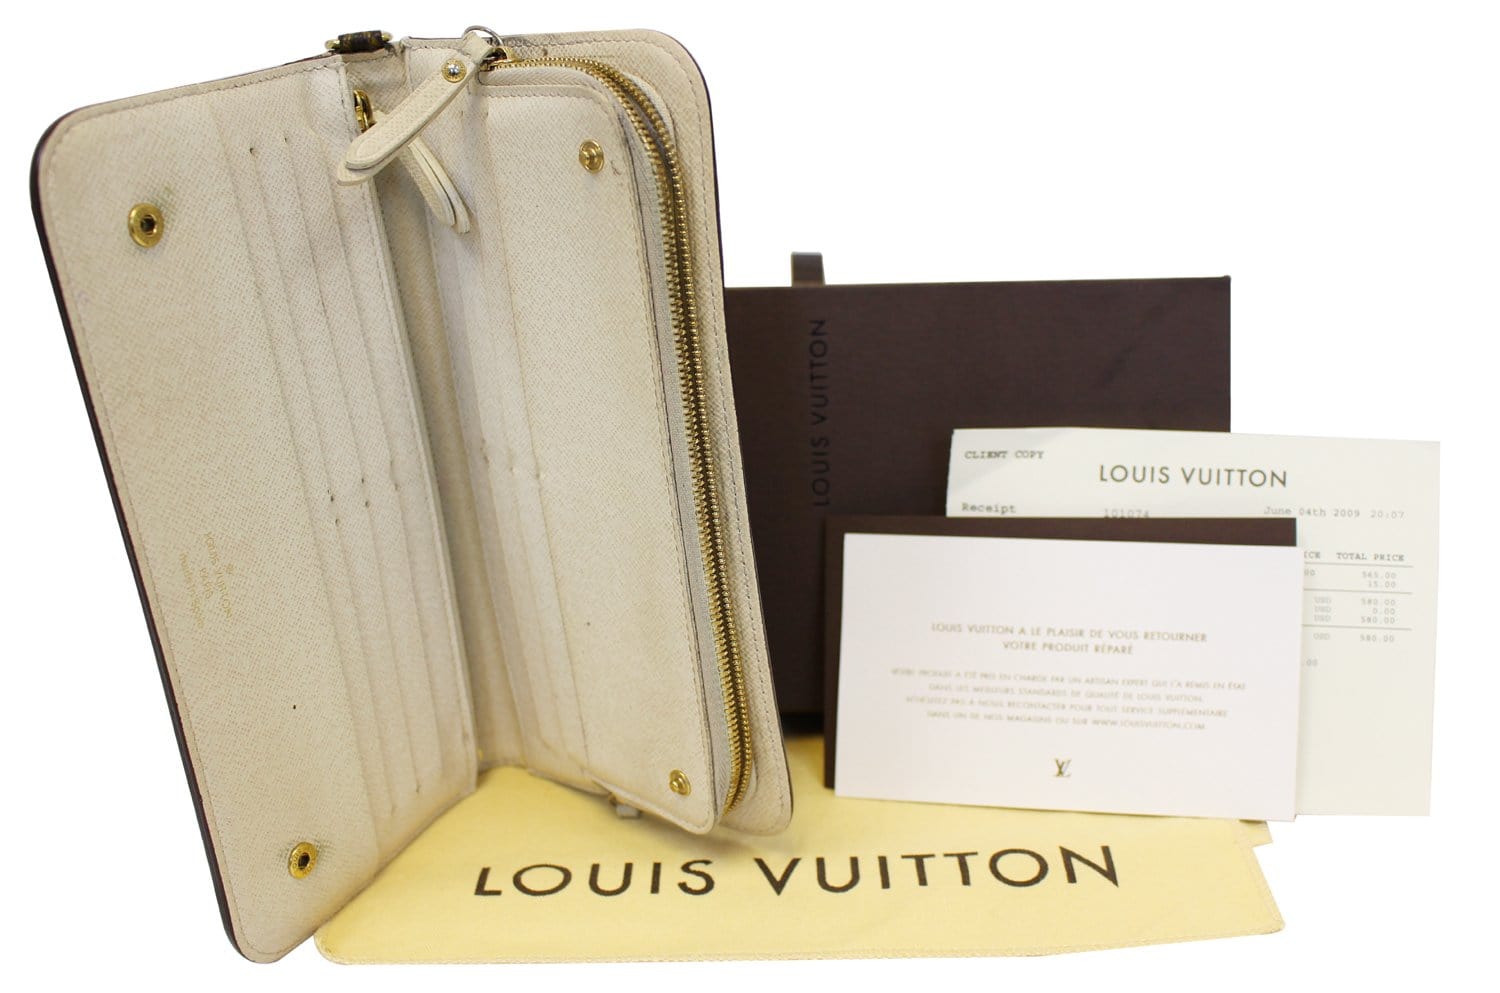 RARE AUTHENTIC LOUIS VUITTON logo novelty eco tote bag canvas handbags  wallet